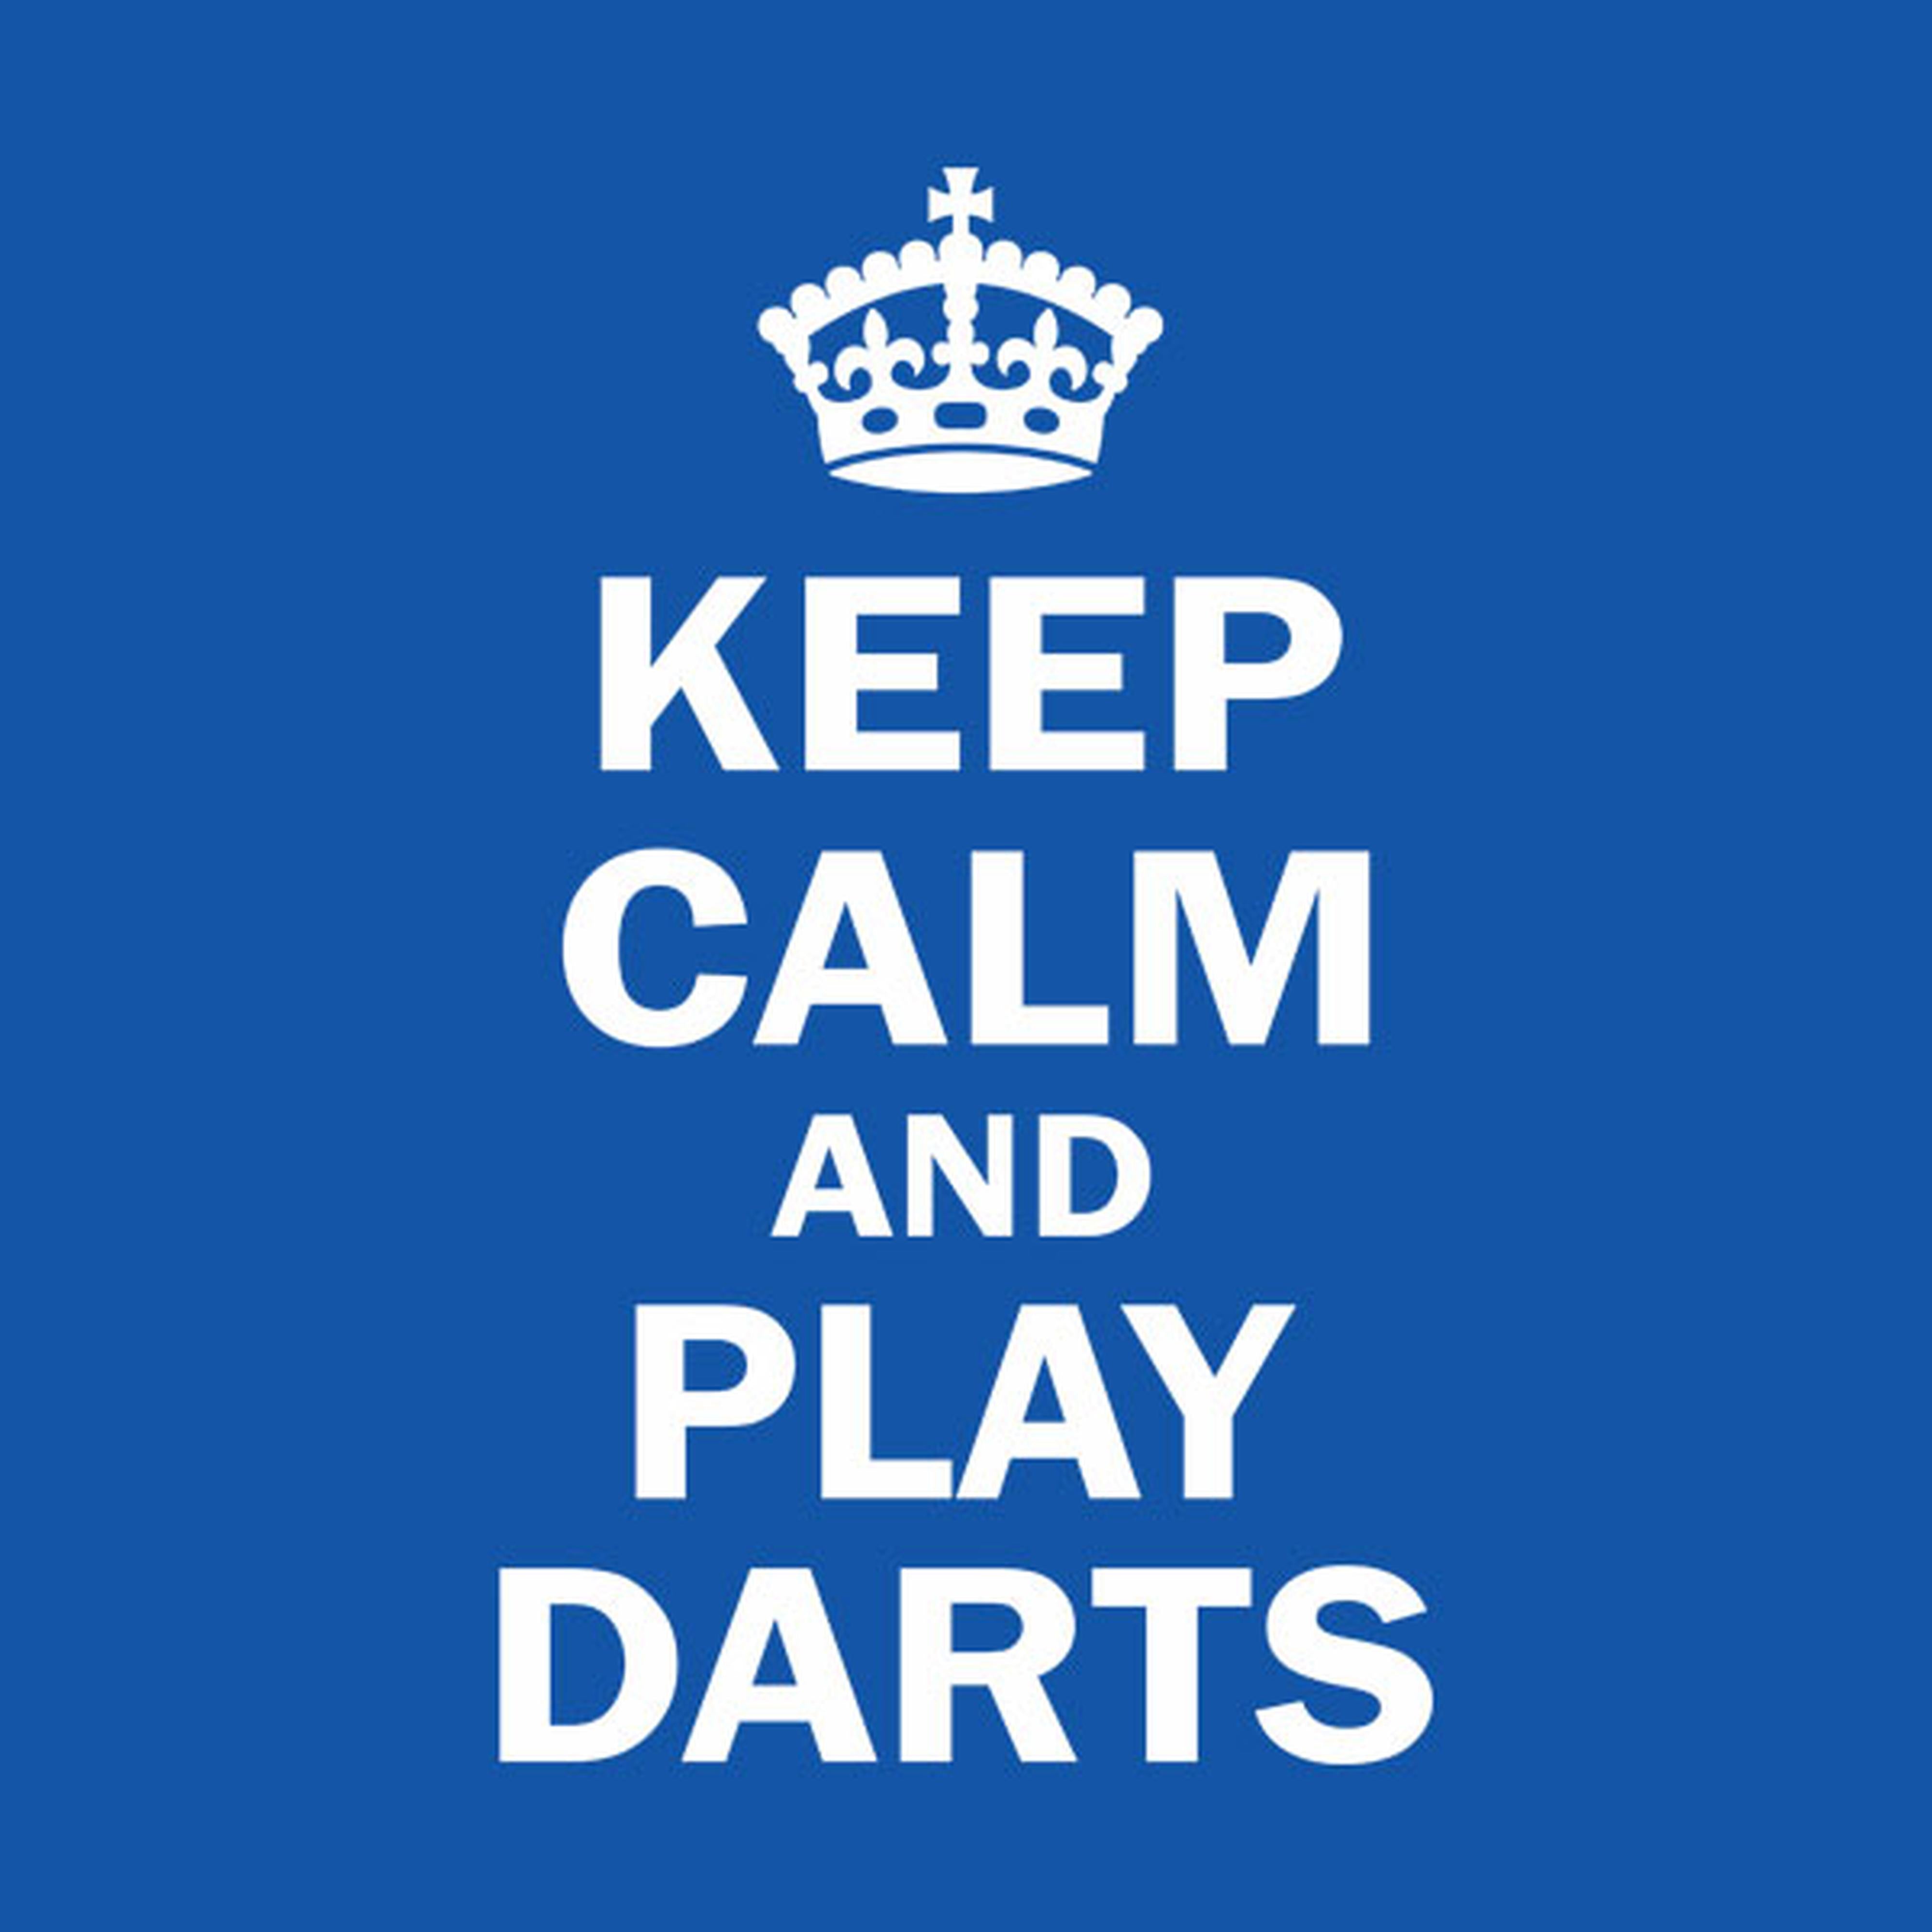 Keep calm and play darts - T-shirt